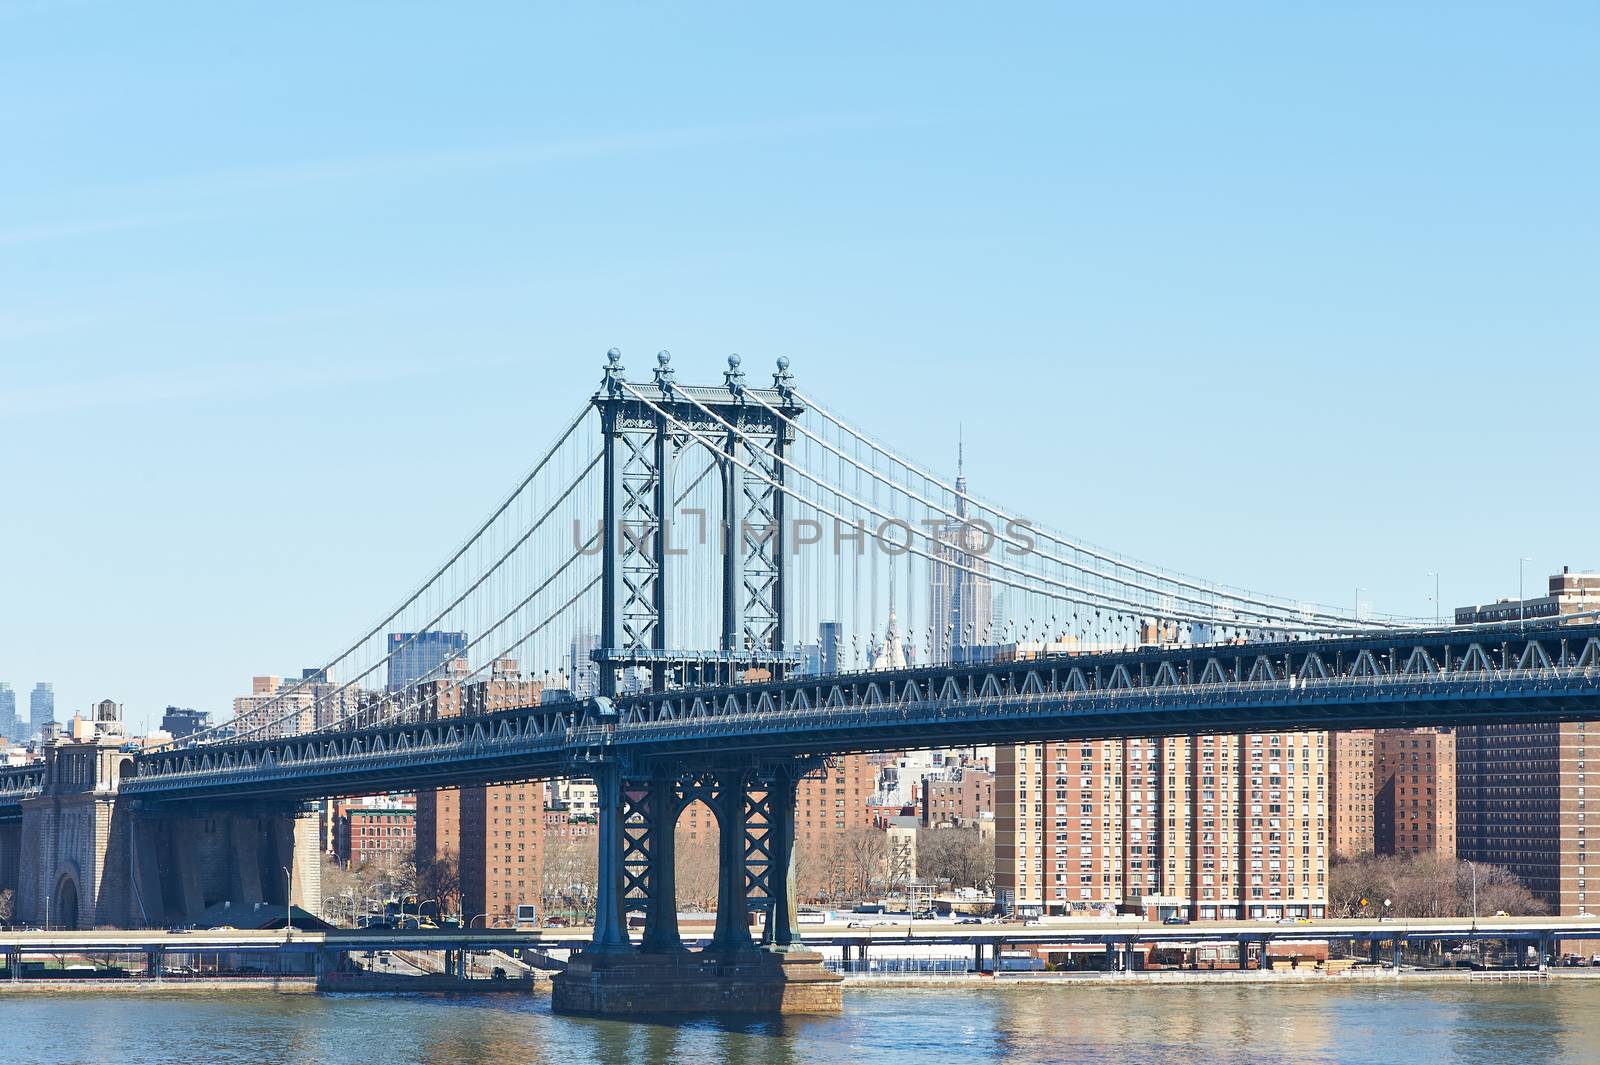 Manhattan Bridge and skyline view from Brooklyn Bridge by haveseen